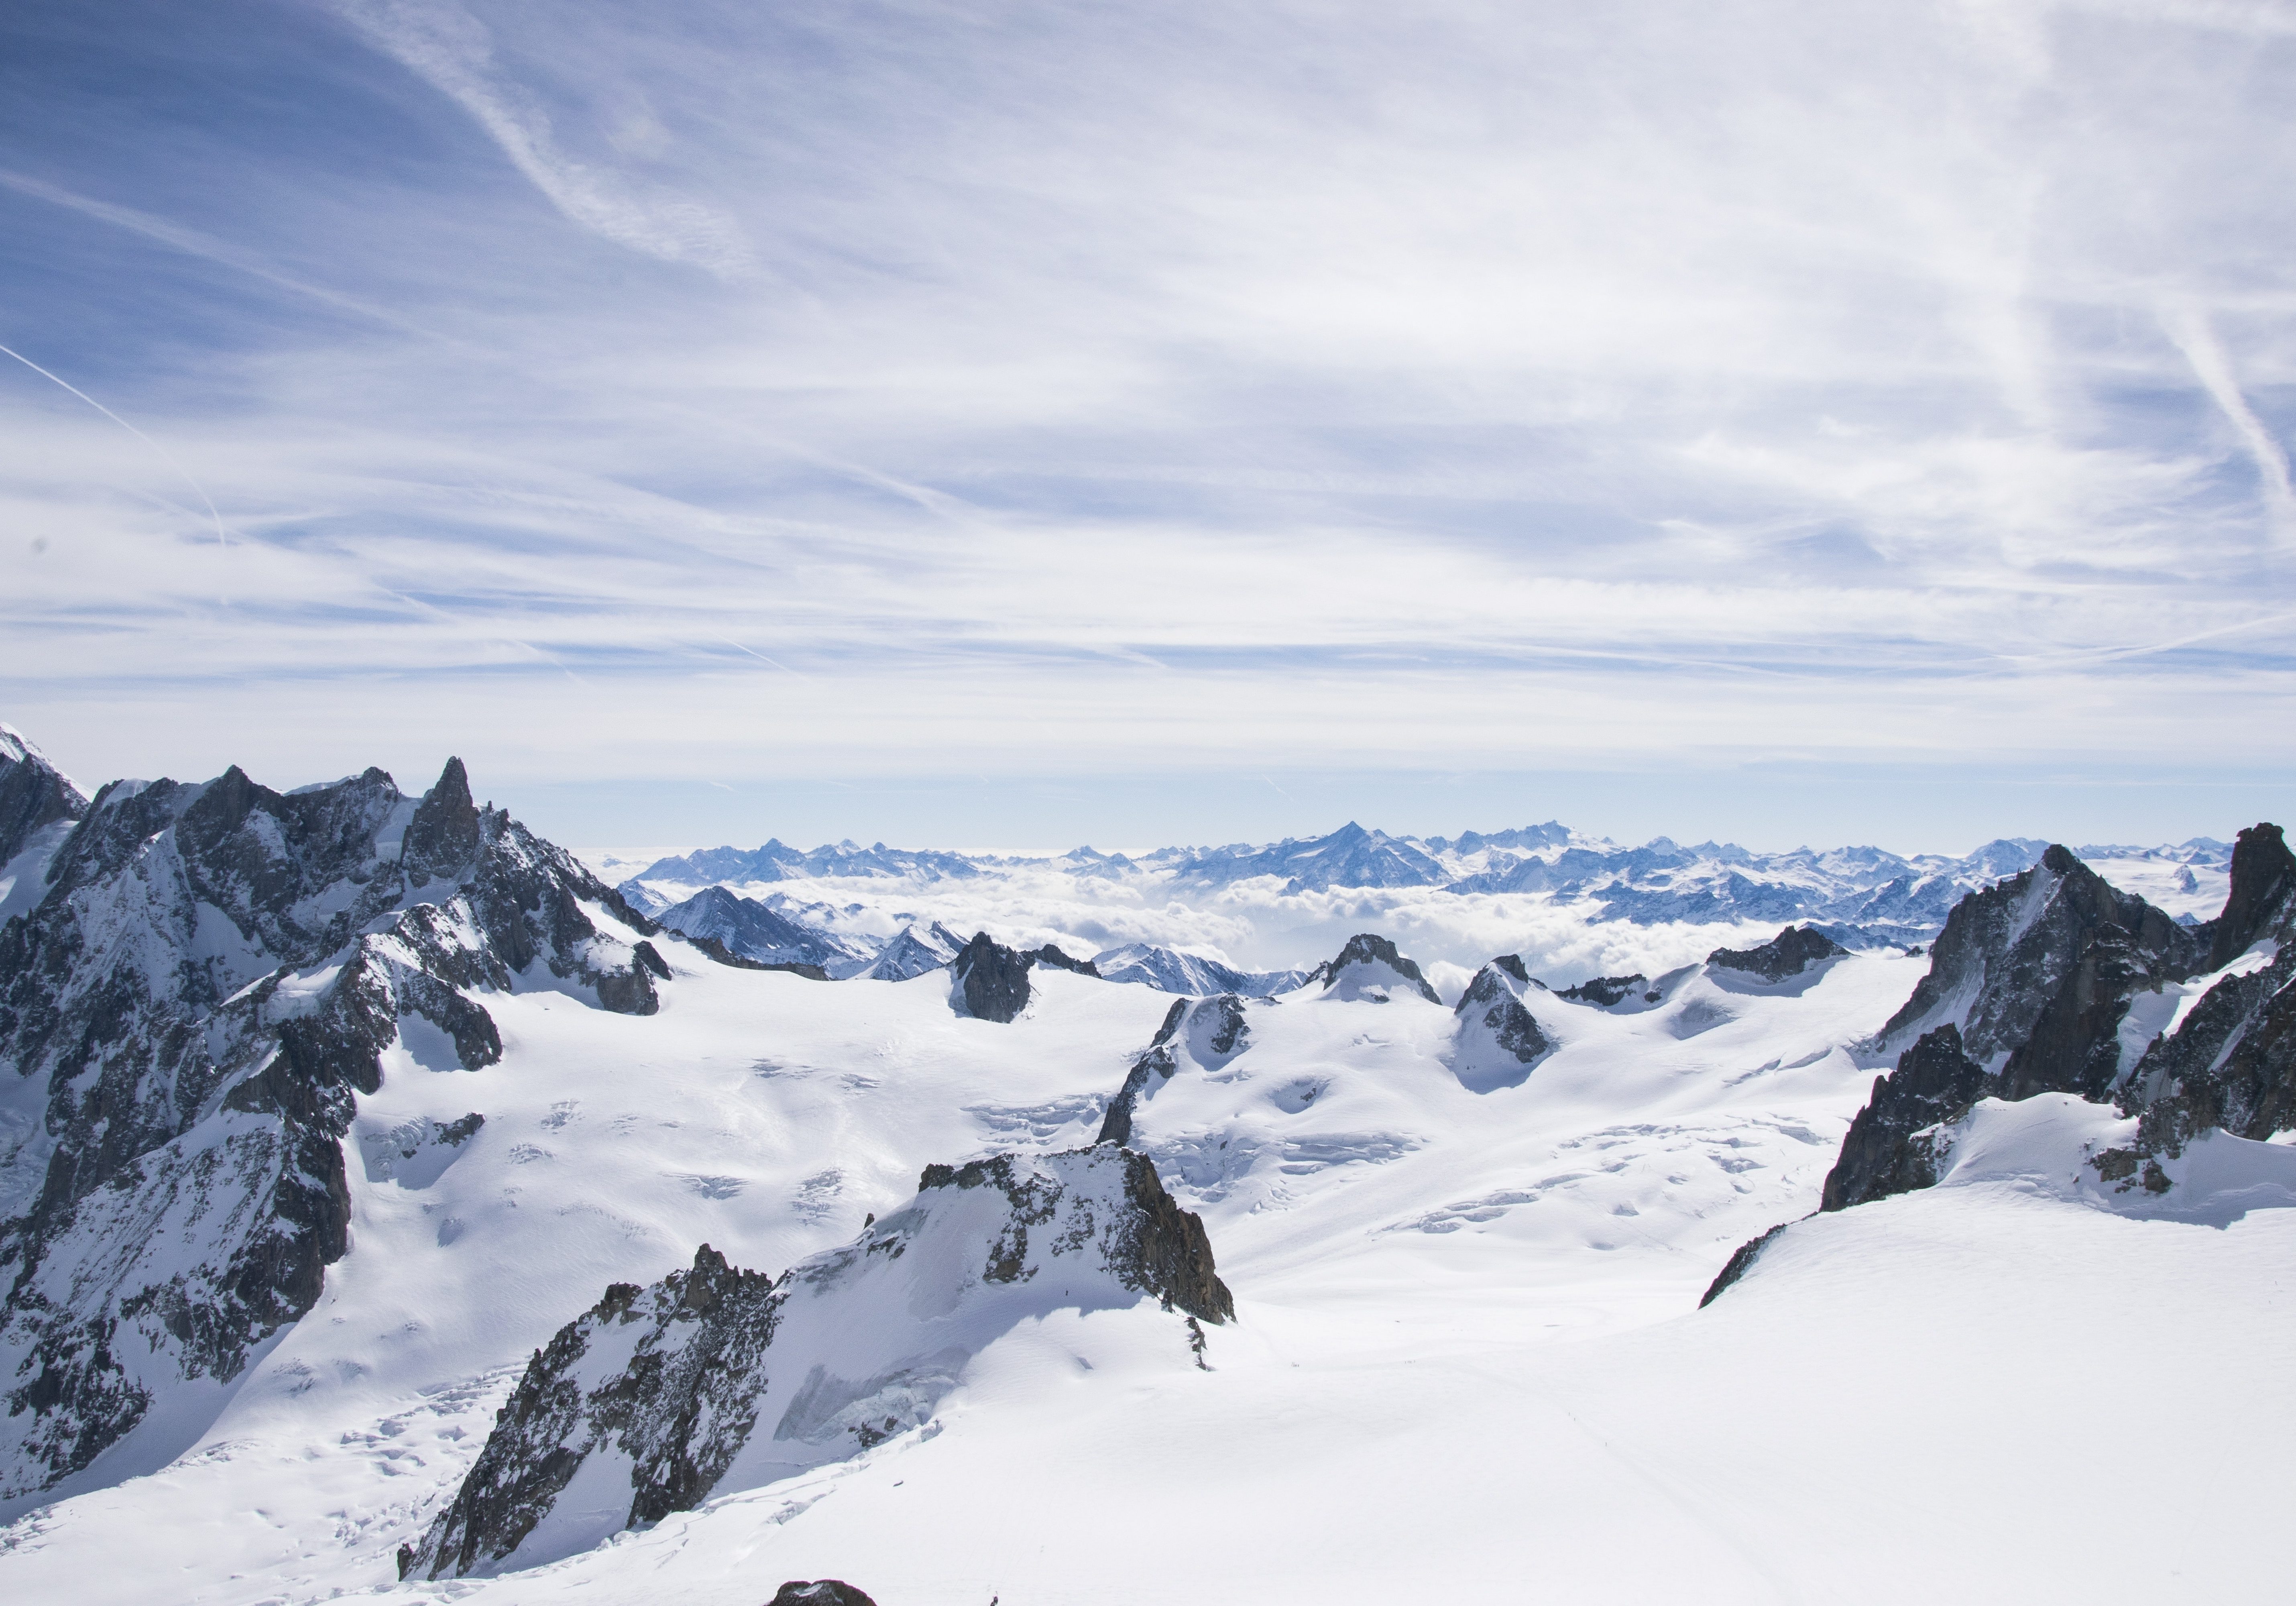 View across the Alps, Haute Route